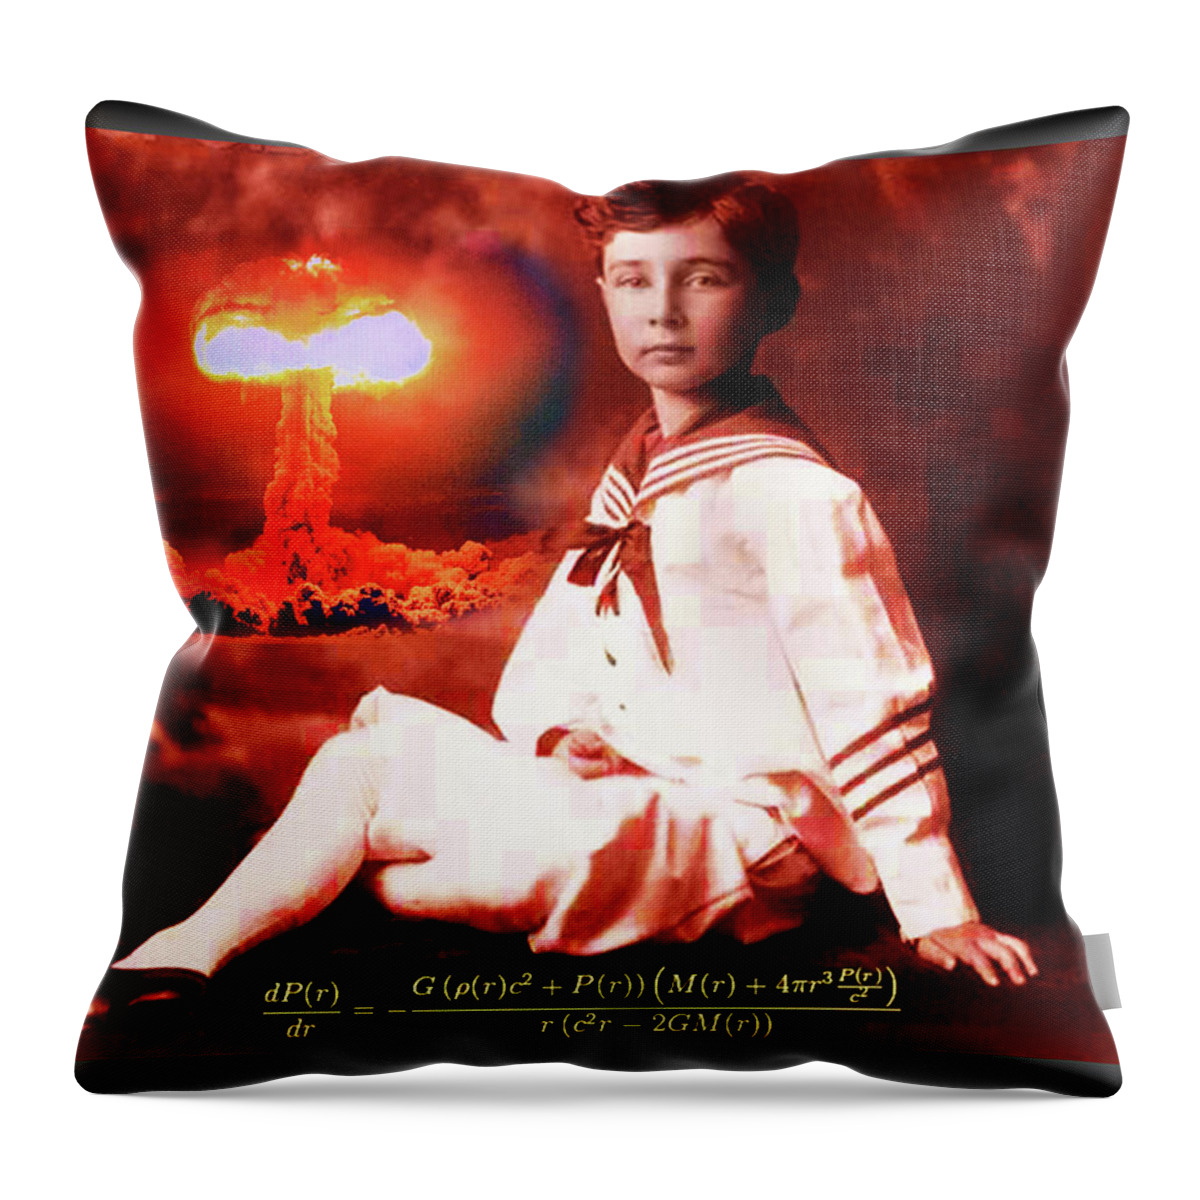 Wunderle Throw Pillow featuring the digital art Julius Robert Oppenheimer by Wunderle